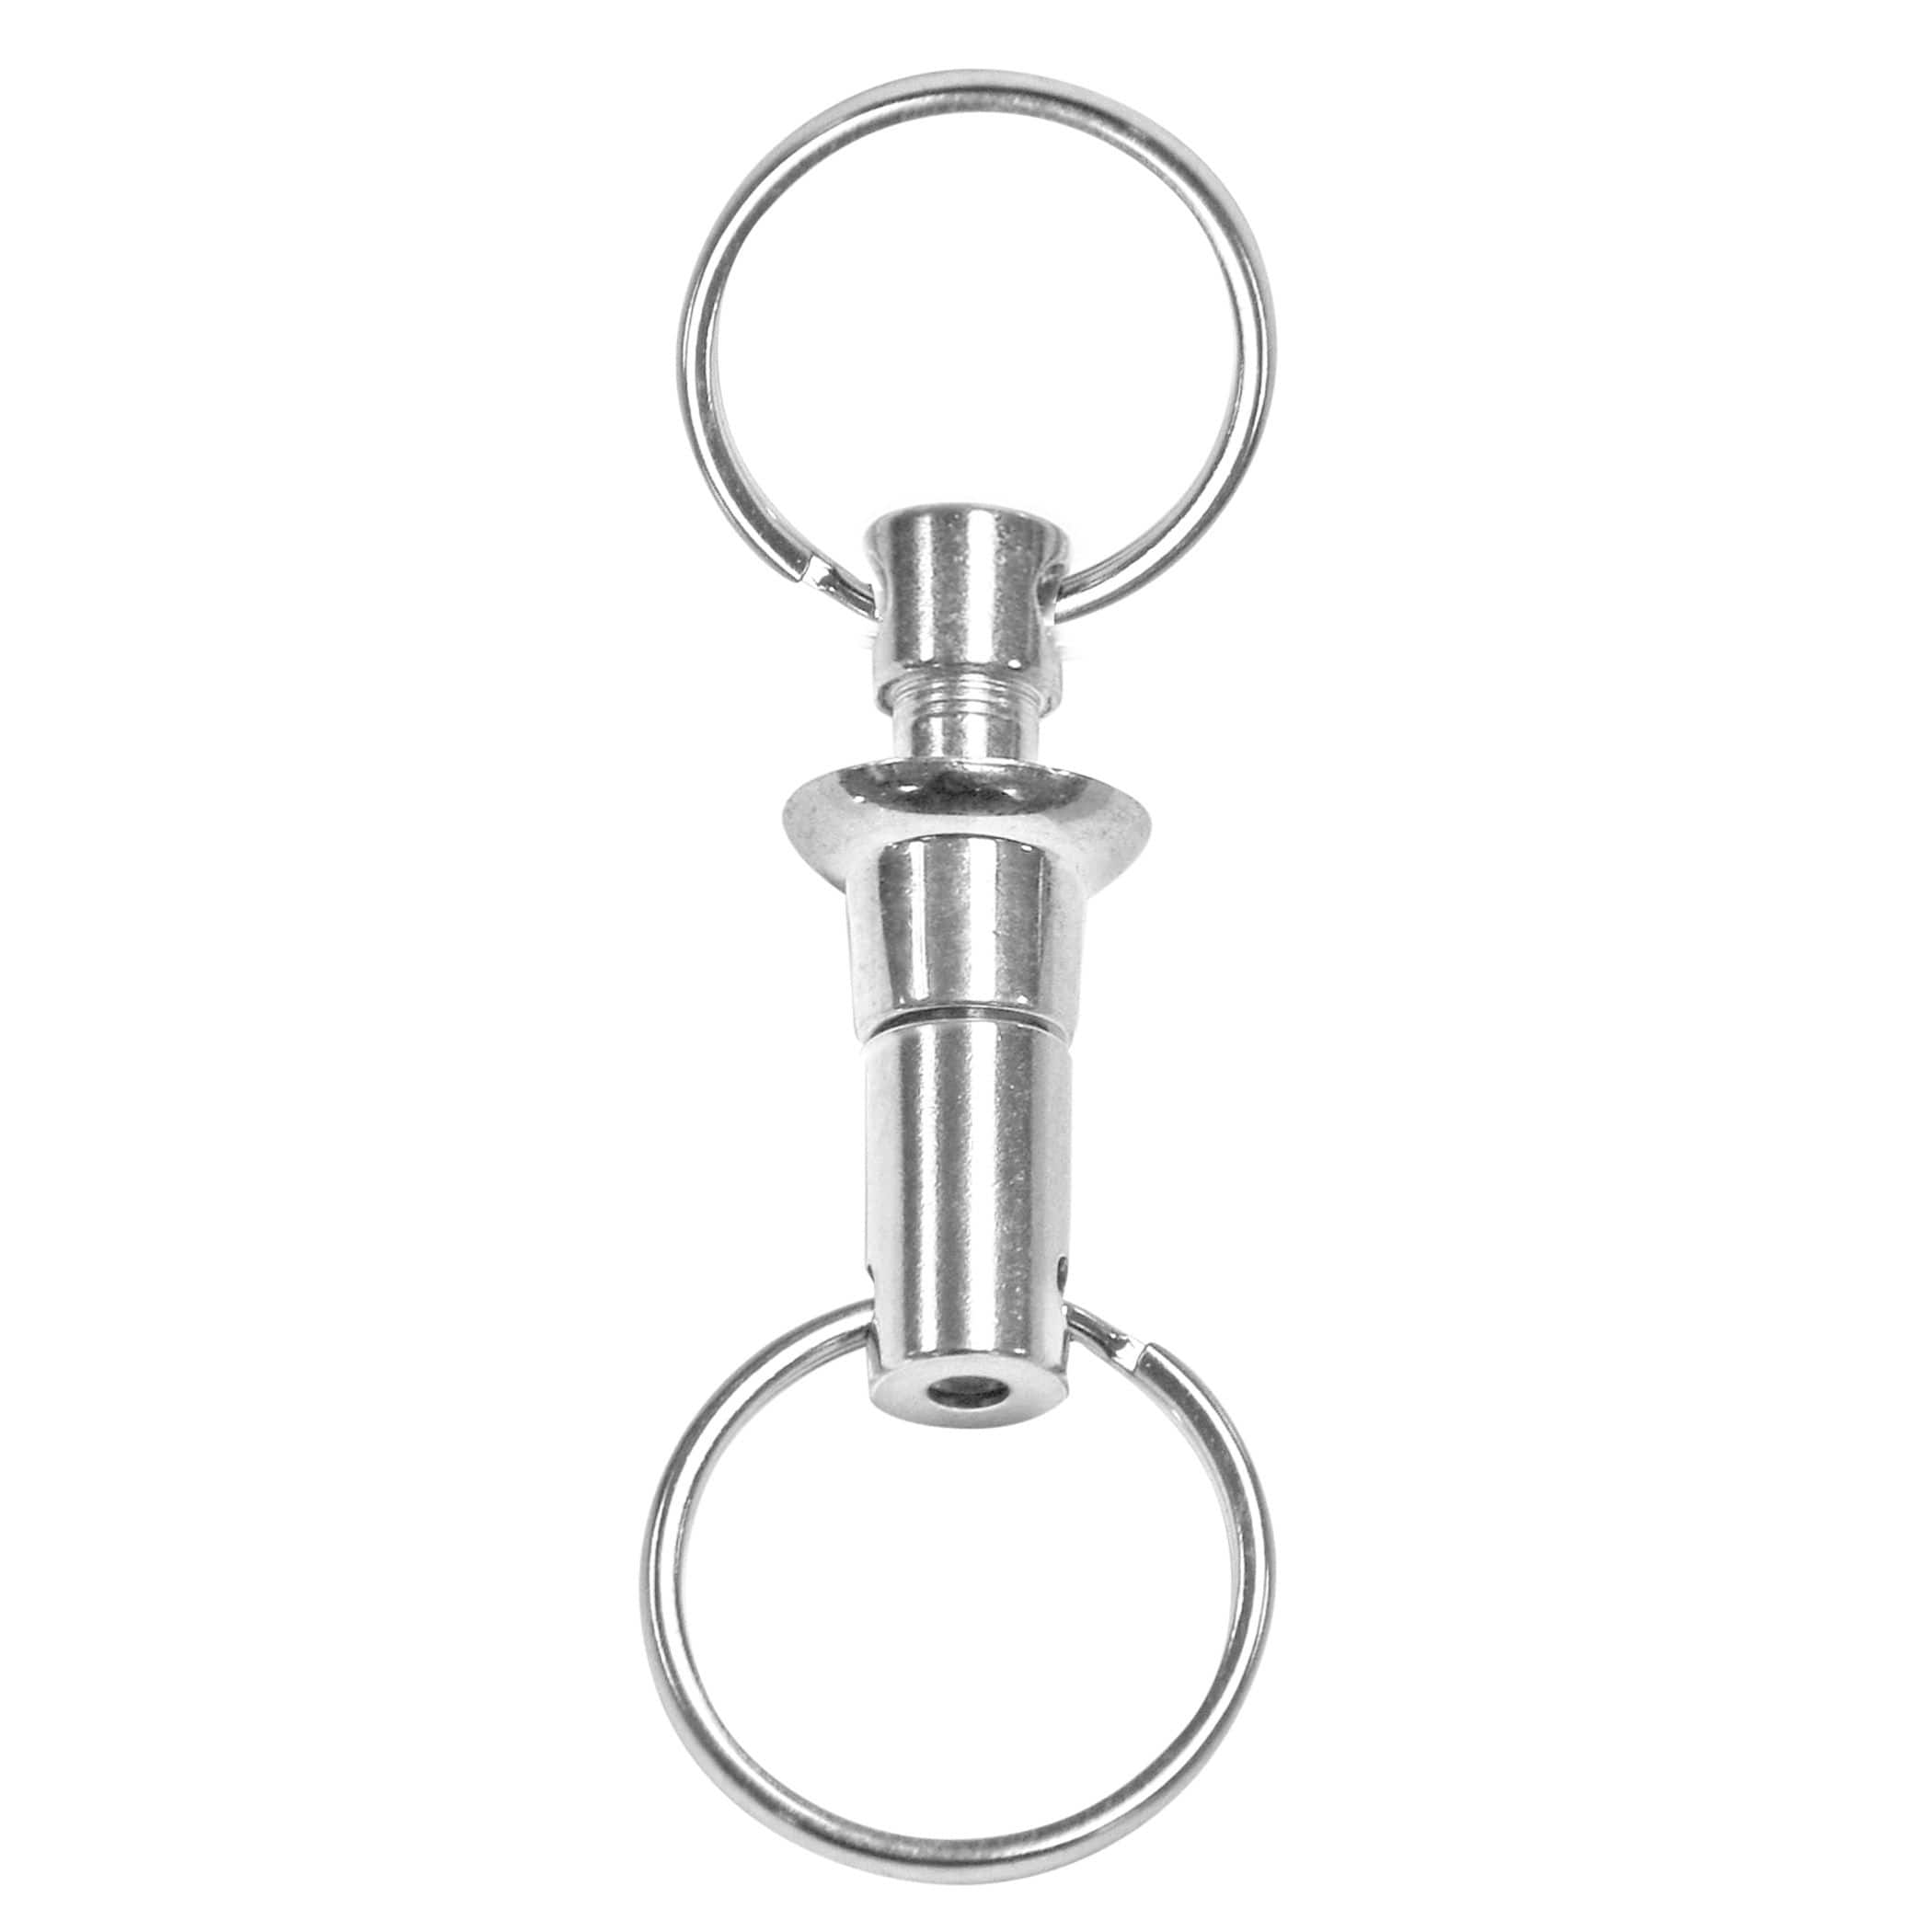 ATB 6 Metal Key Ring Detachable Pull Apart Keyring Keychain Quick Release Break Away